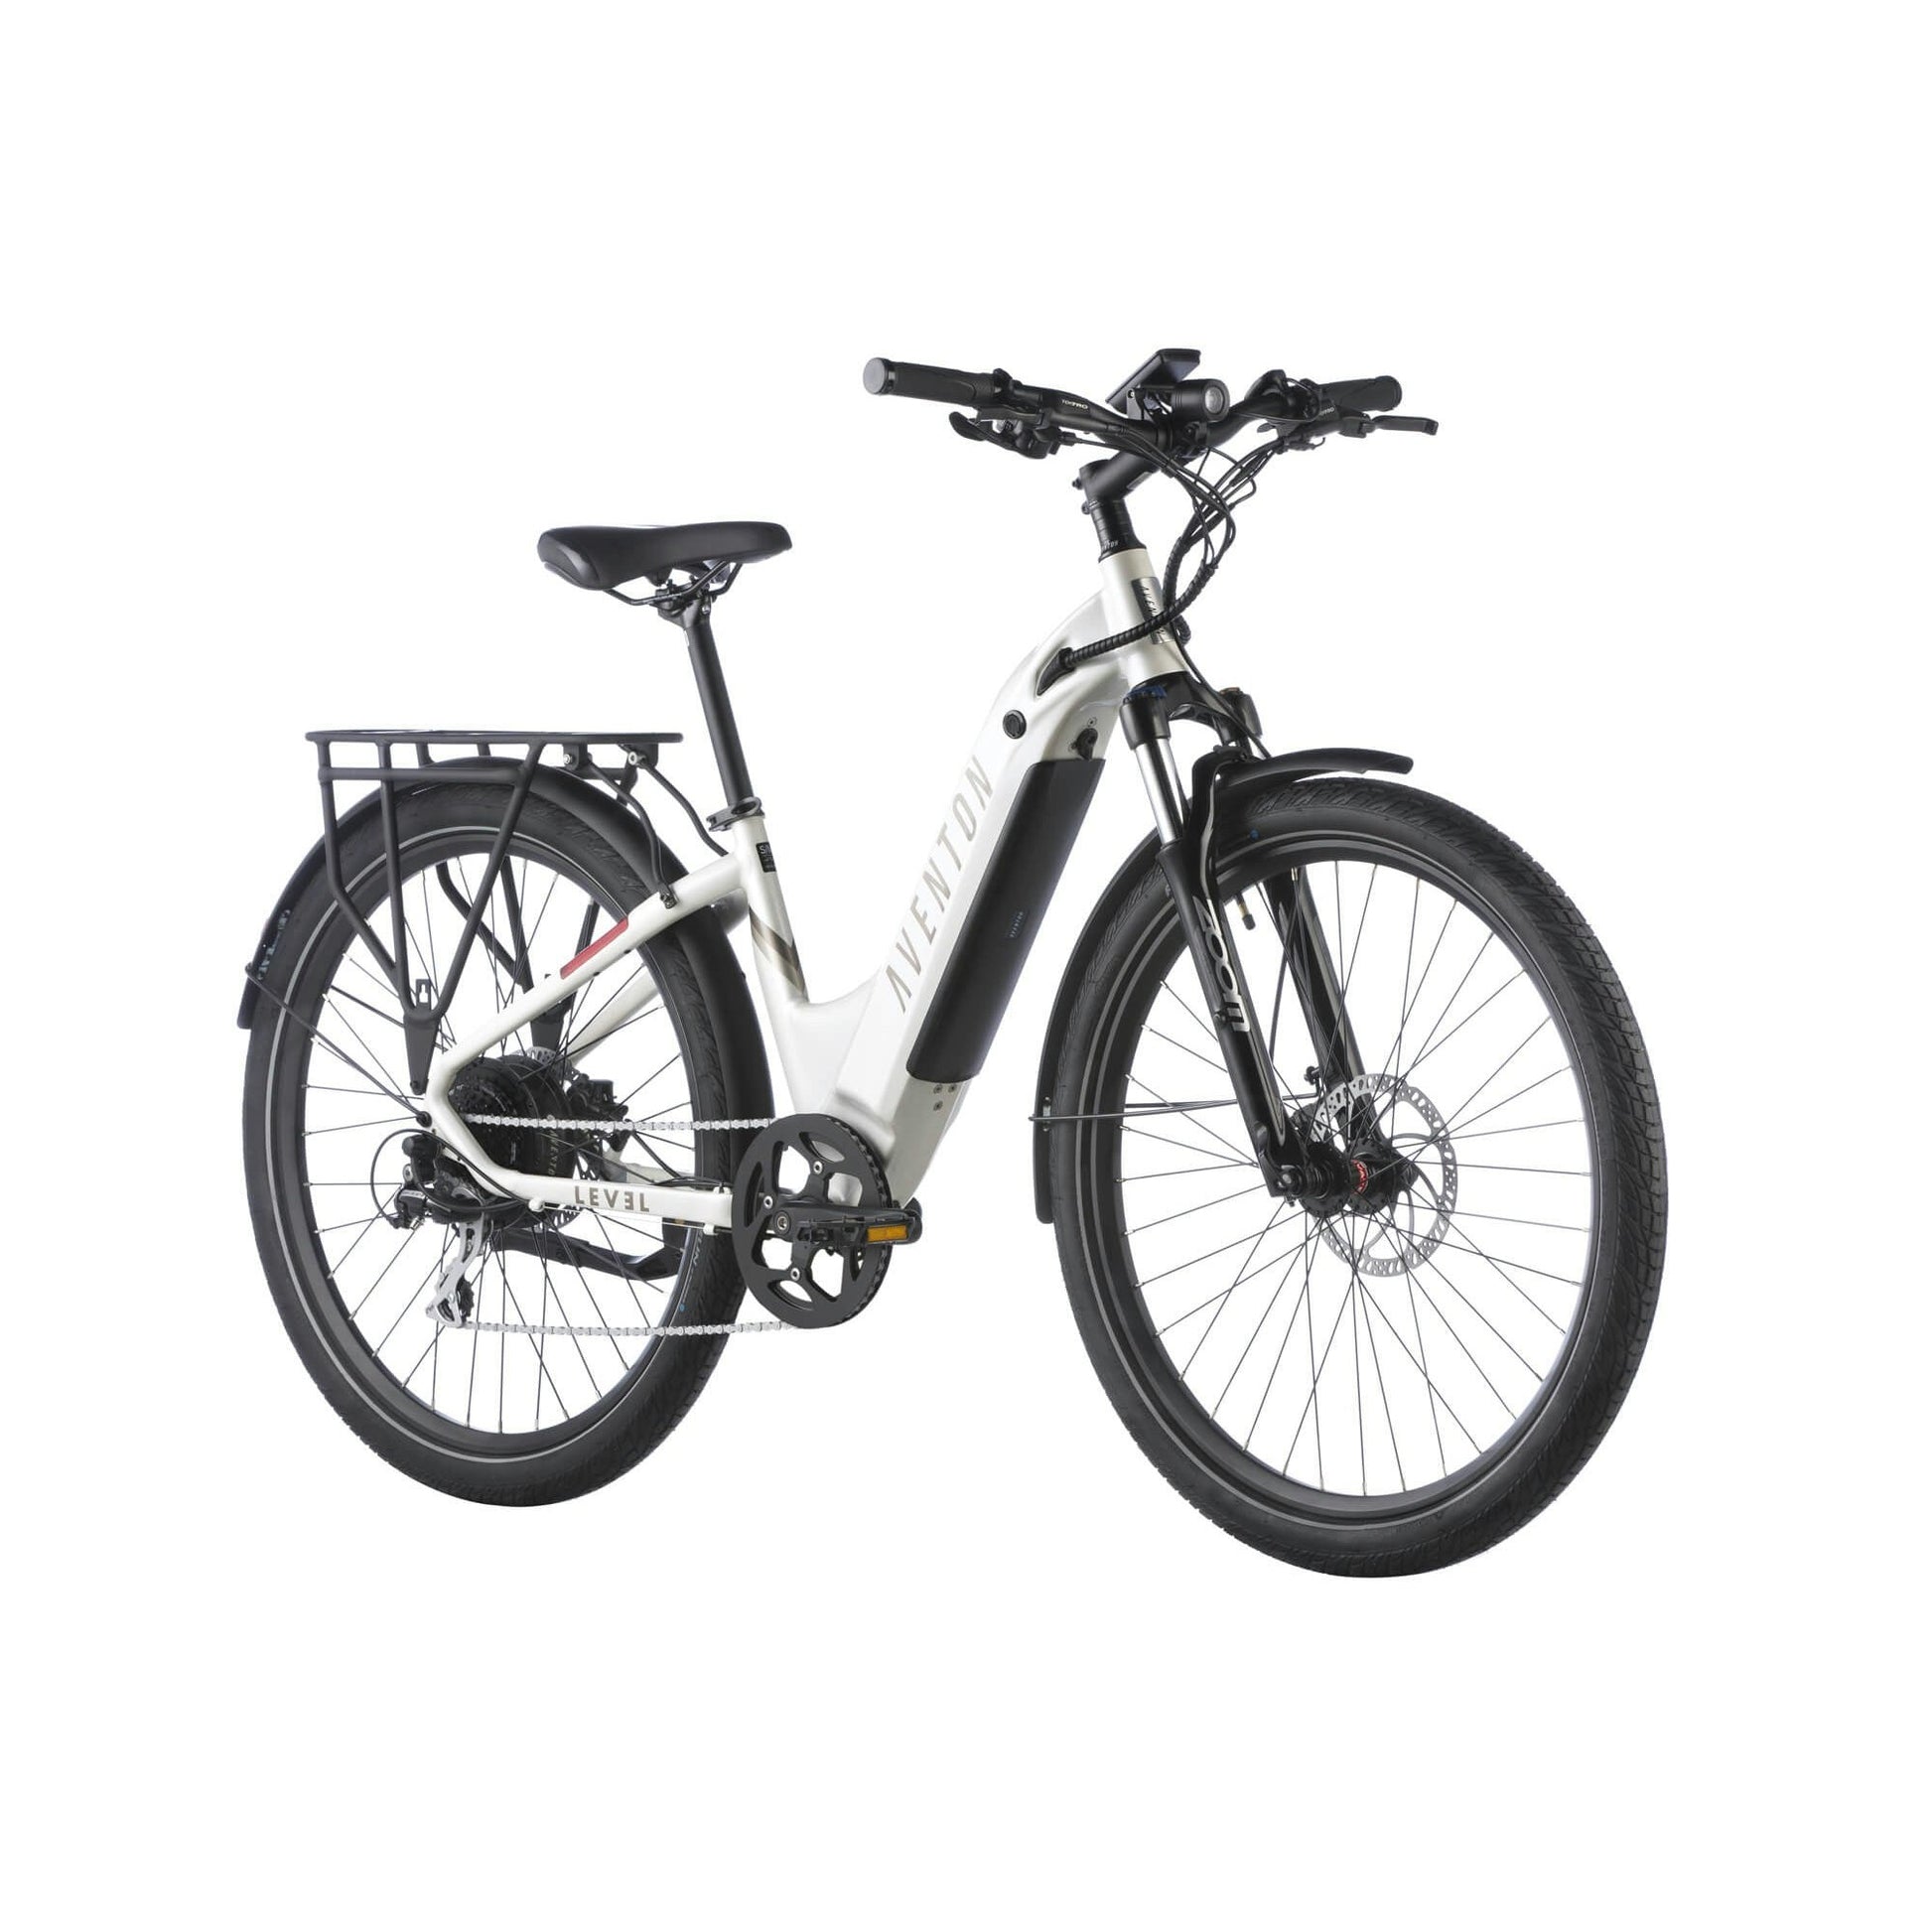 Aventon Level V2 Step-Thru Electric Bike - Bikes - E-Hybrid - Bicycle Warehouse